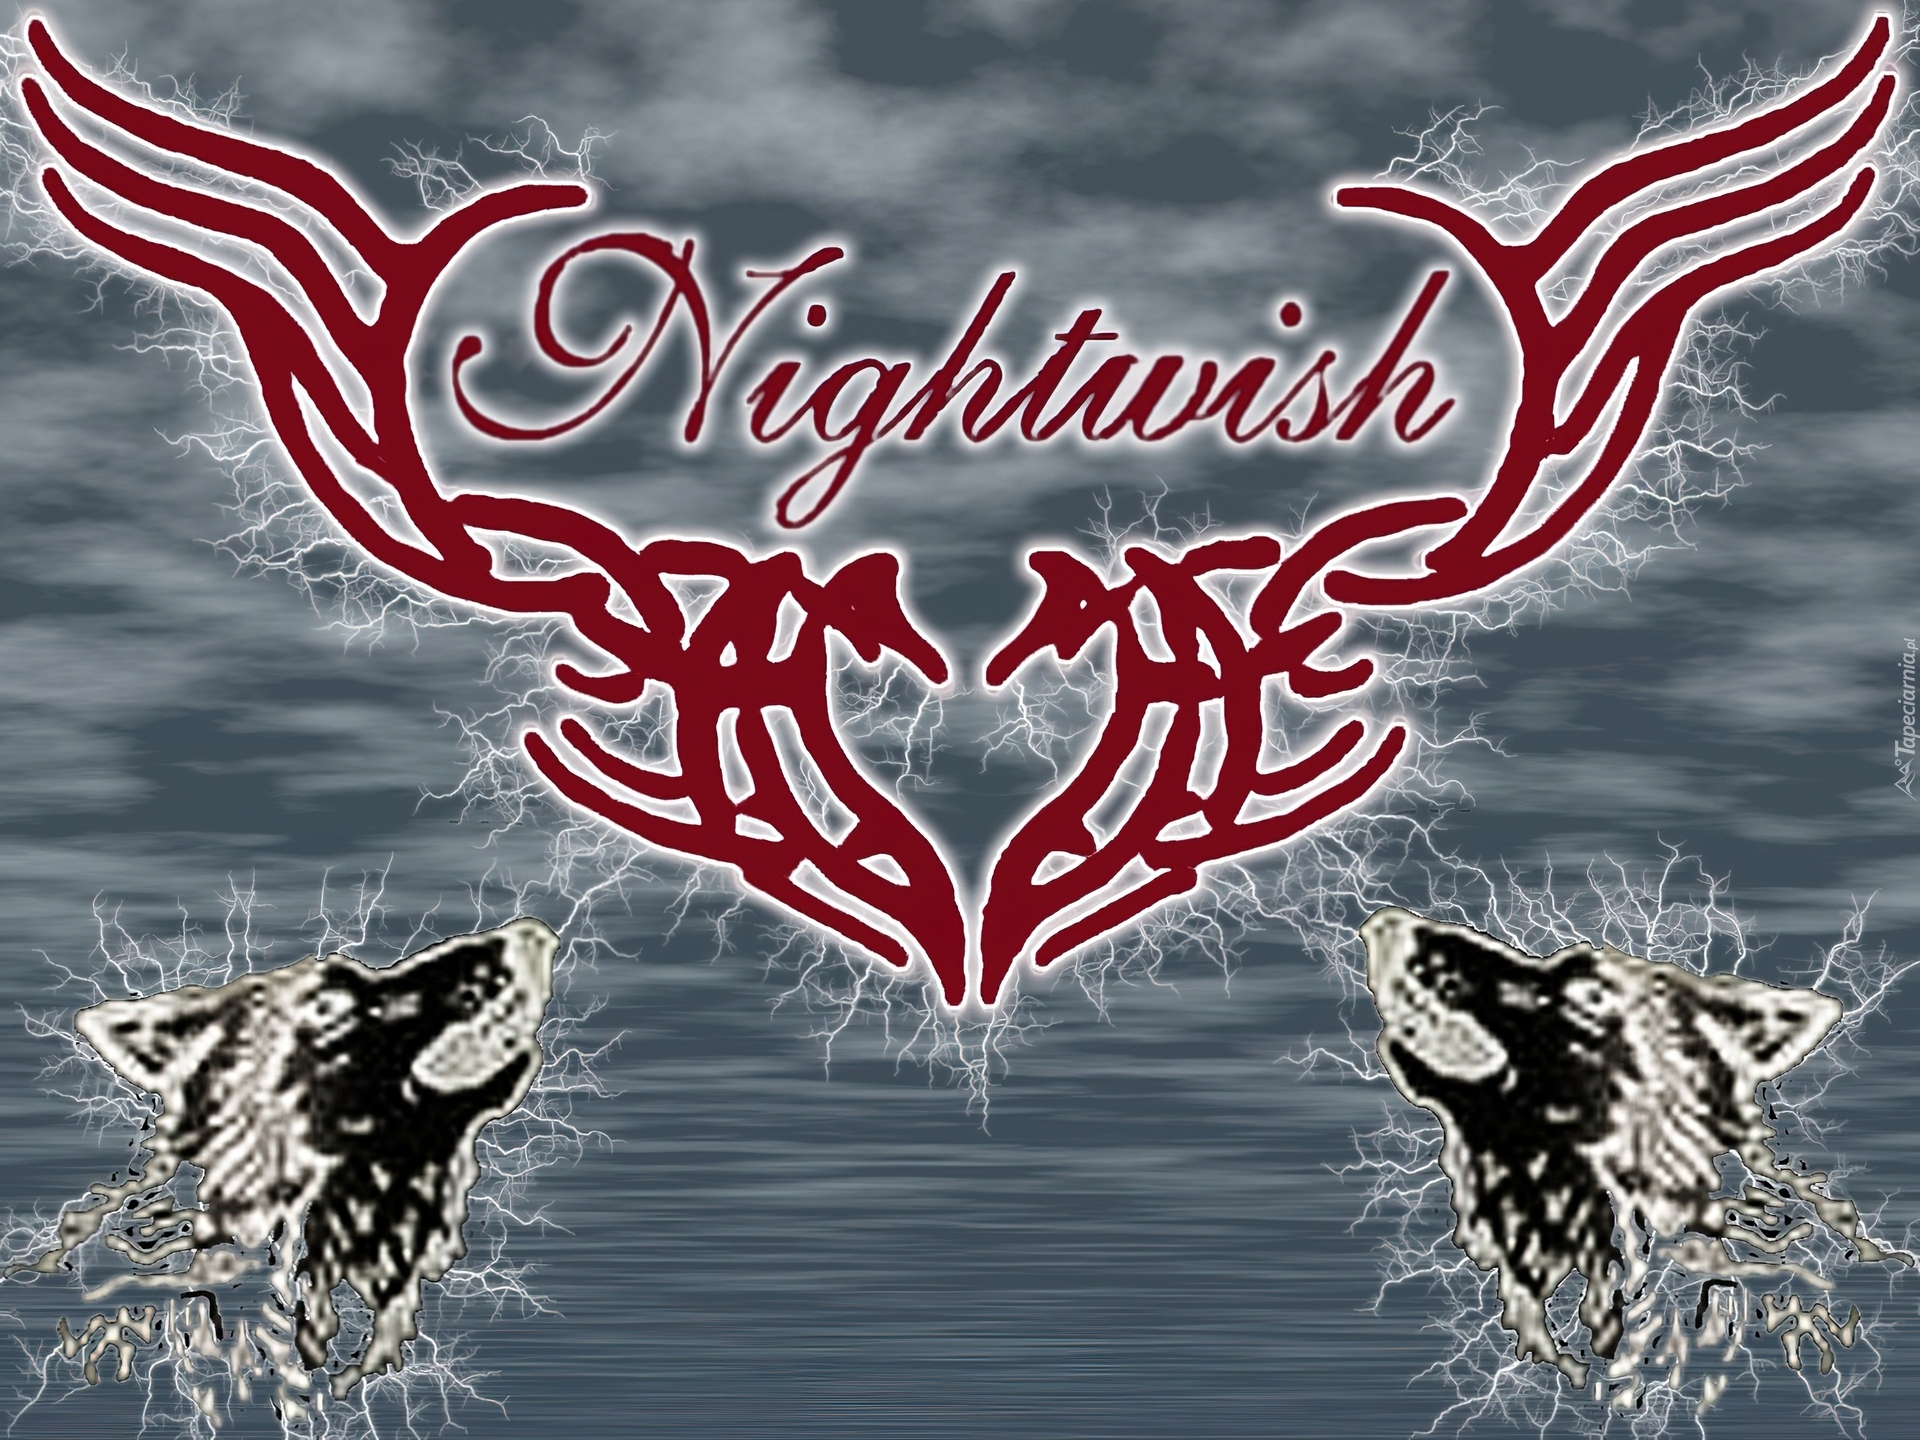 Nightwish,wilki, znak